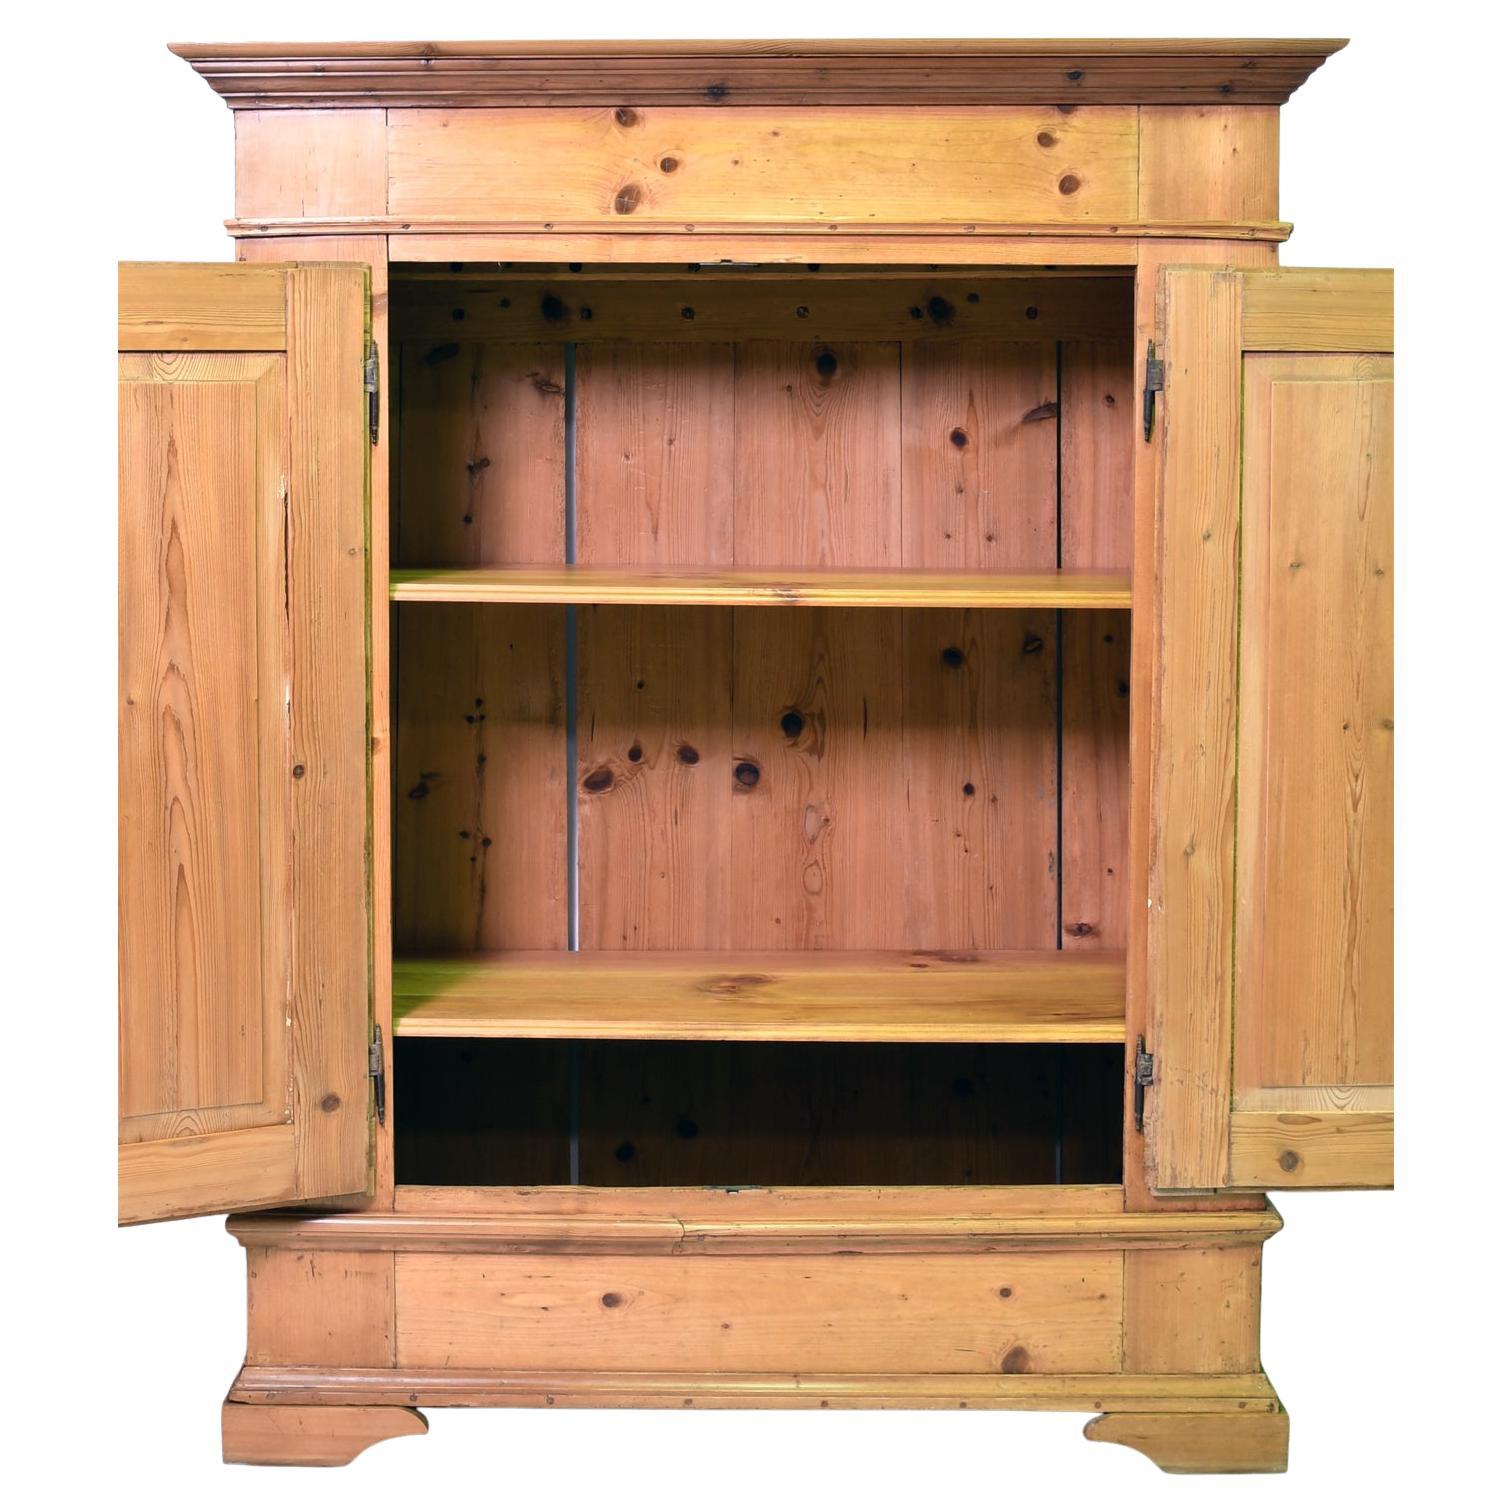 Biedermeier Antique European Pine Armoire with Interior Adjustable Shelves, circa 1850